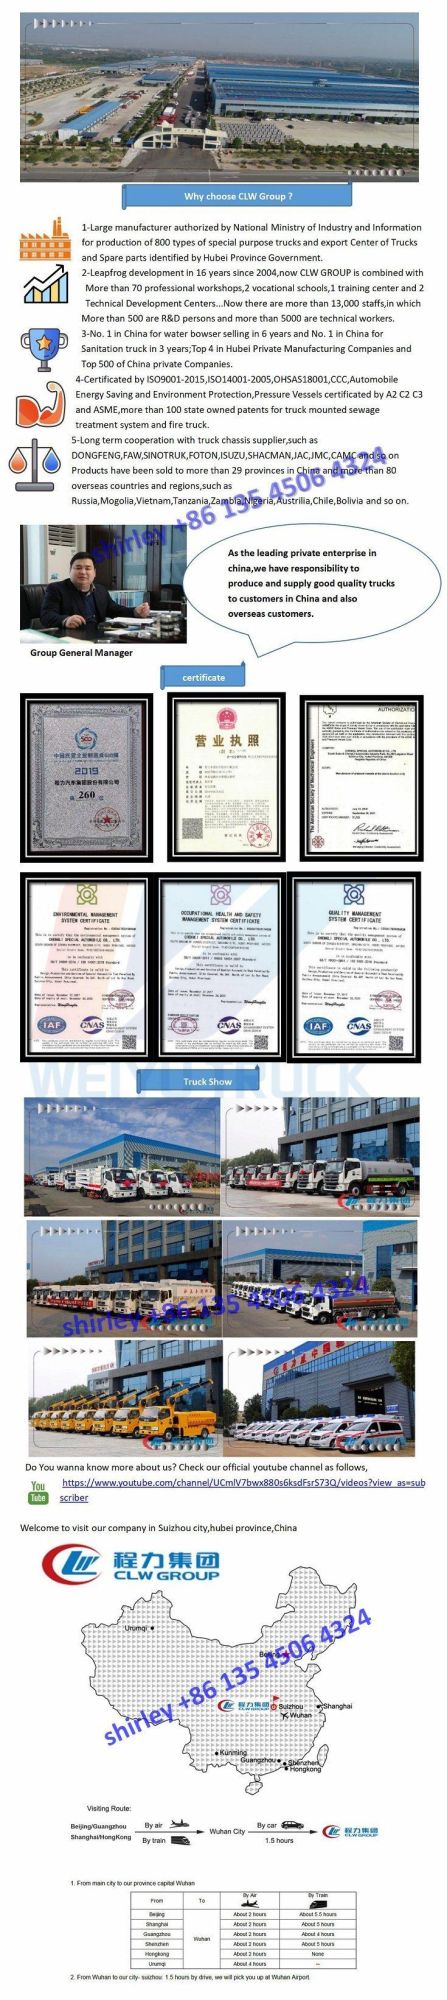 HOWO Isuzu Dongfeng JAC Trash Refuse Recycling Truck 5tons 8m3 8 Cubic Meters Municipal Sanitation Rubbish Refuse Collection Vehicle